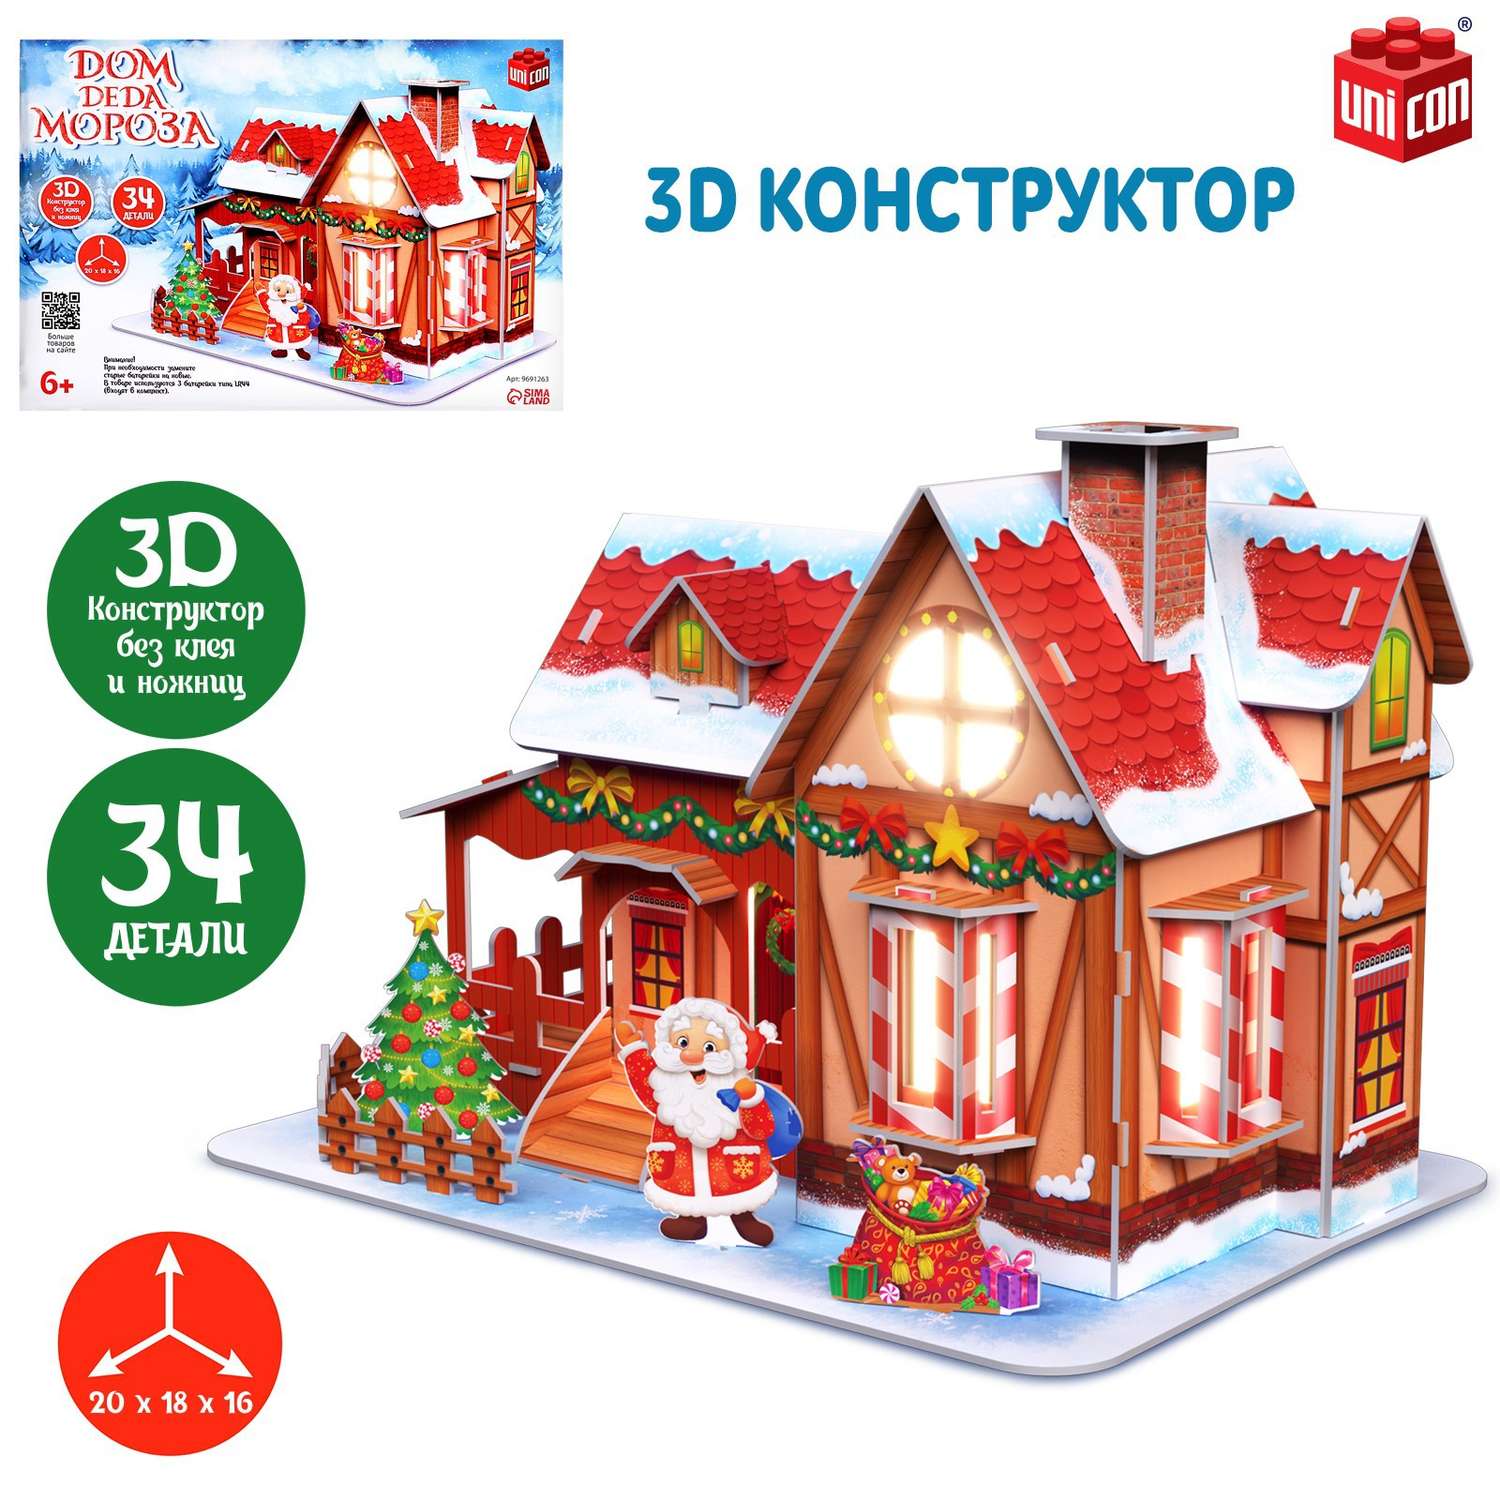 3D-конструктор Unicon «Дом Деда Мороза» с гирляндой 34 детали - фото 1